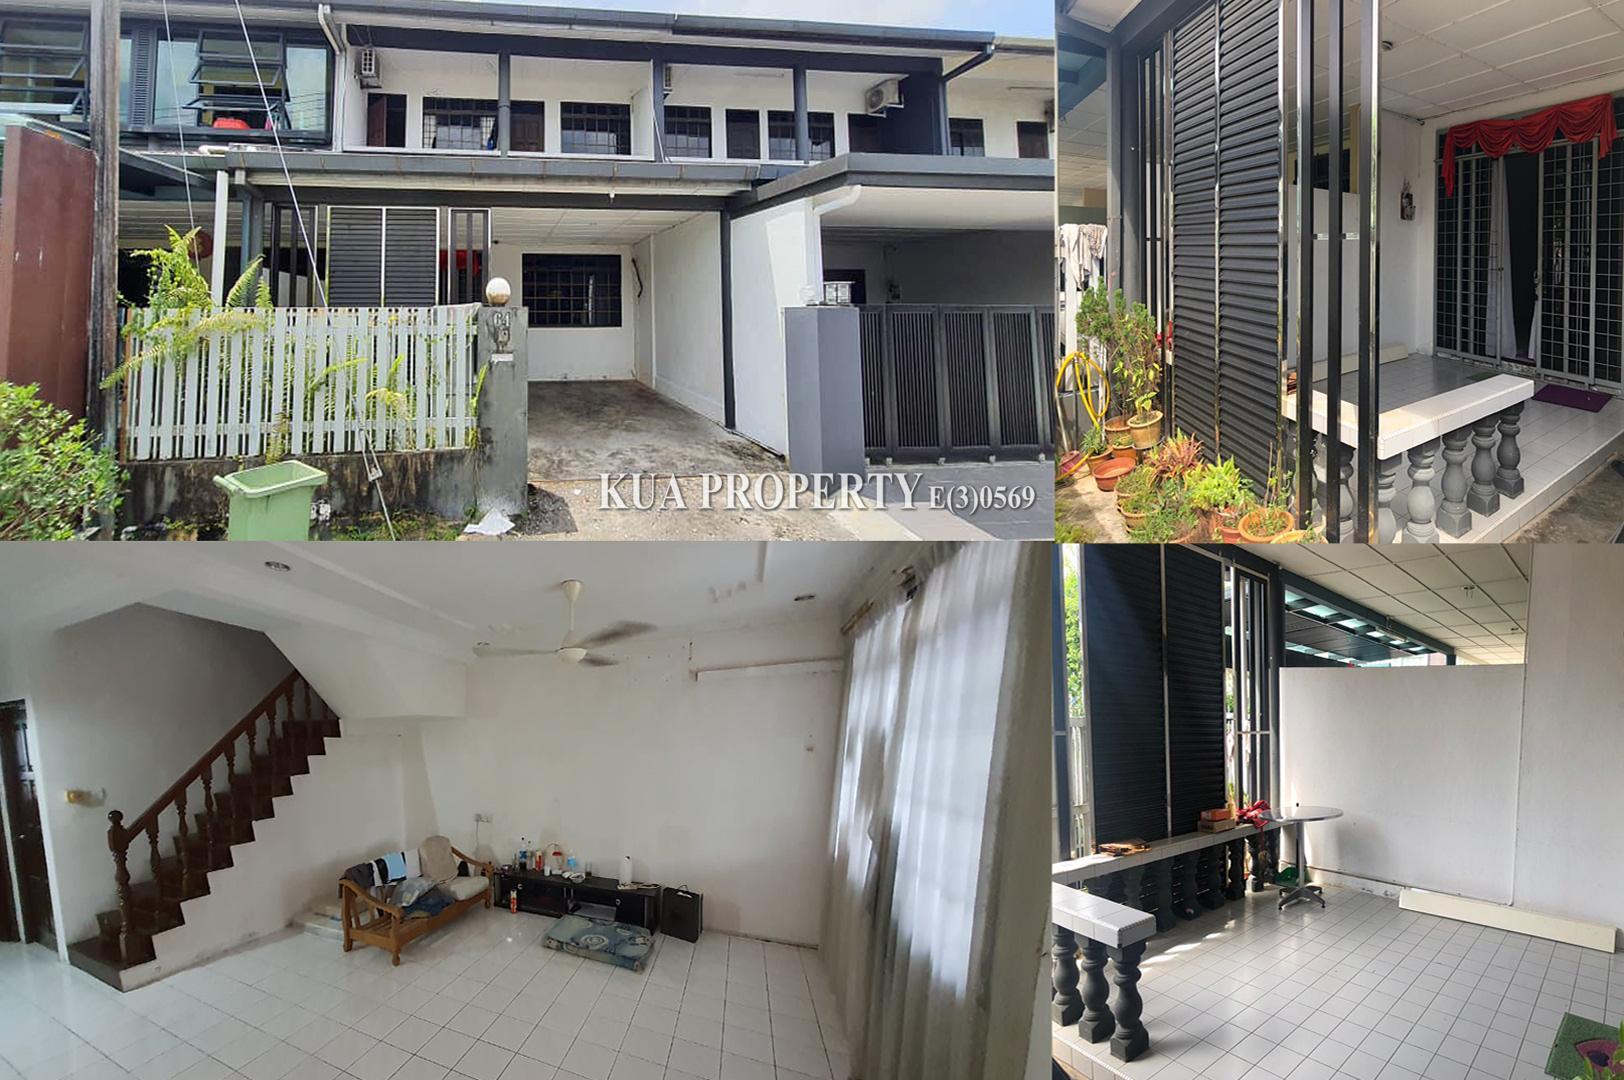 Double Storey Terrace Intermediate For Sale! at Kempas/durian burung